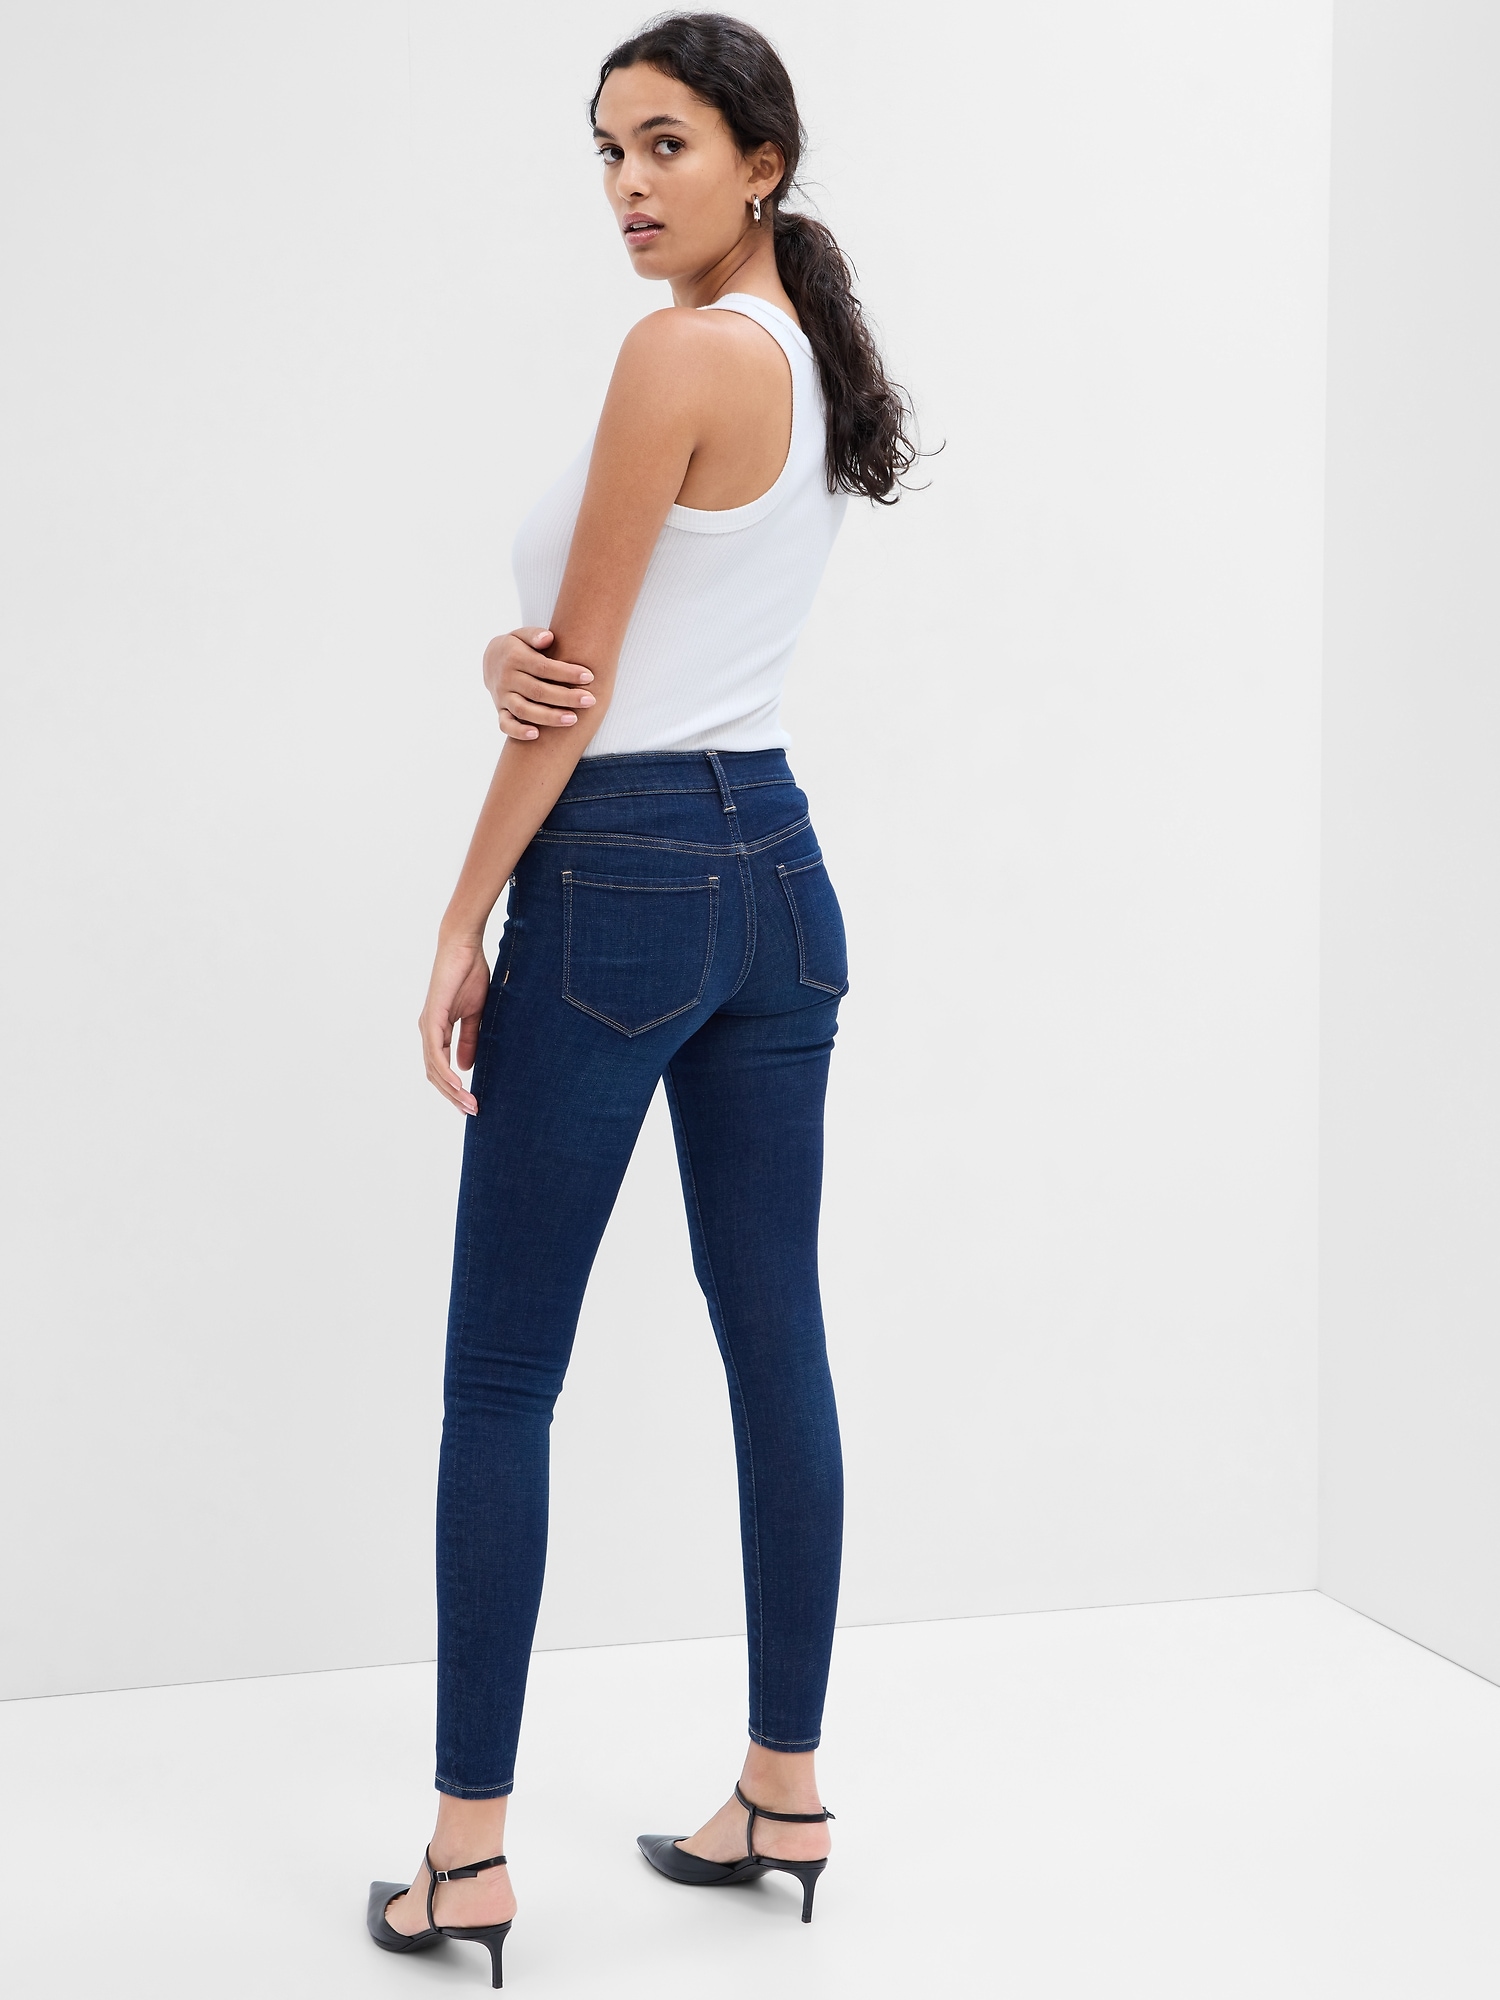 Leggins_Summer_Green/ Fit jeans/ladies pant